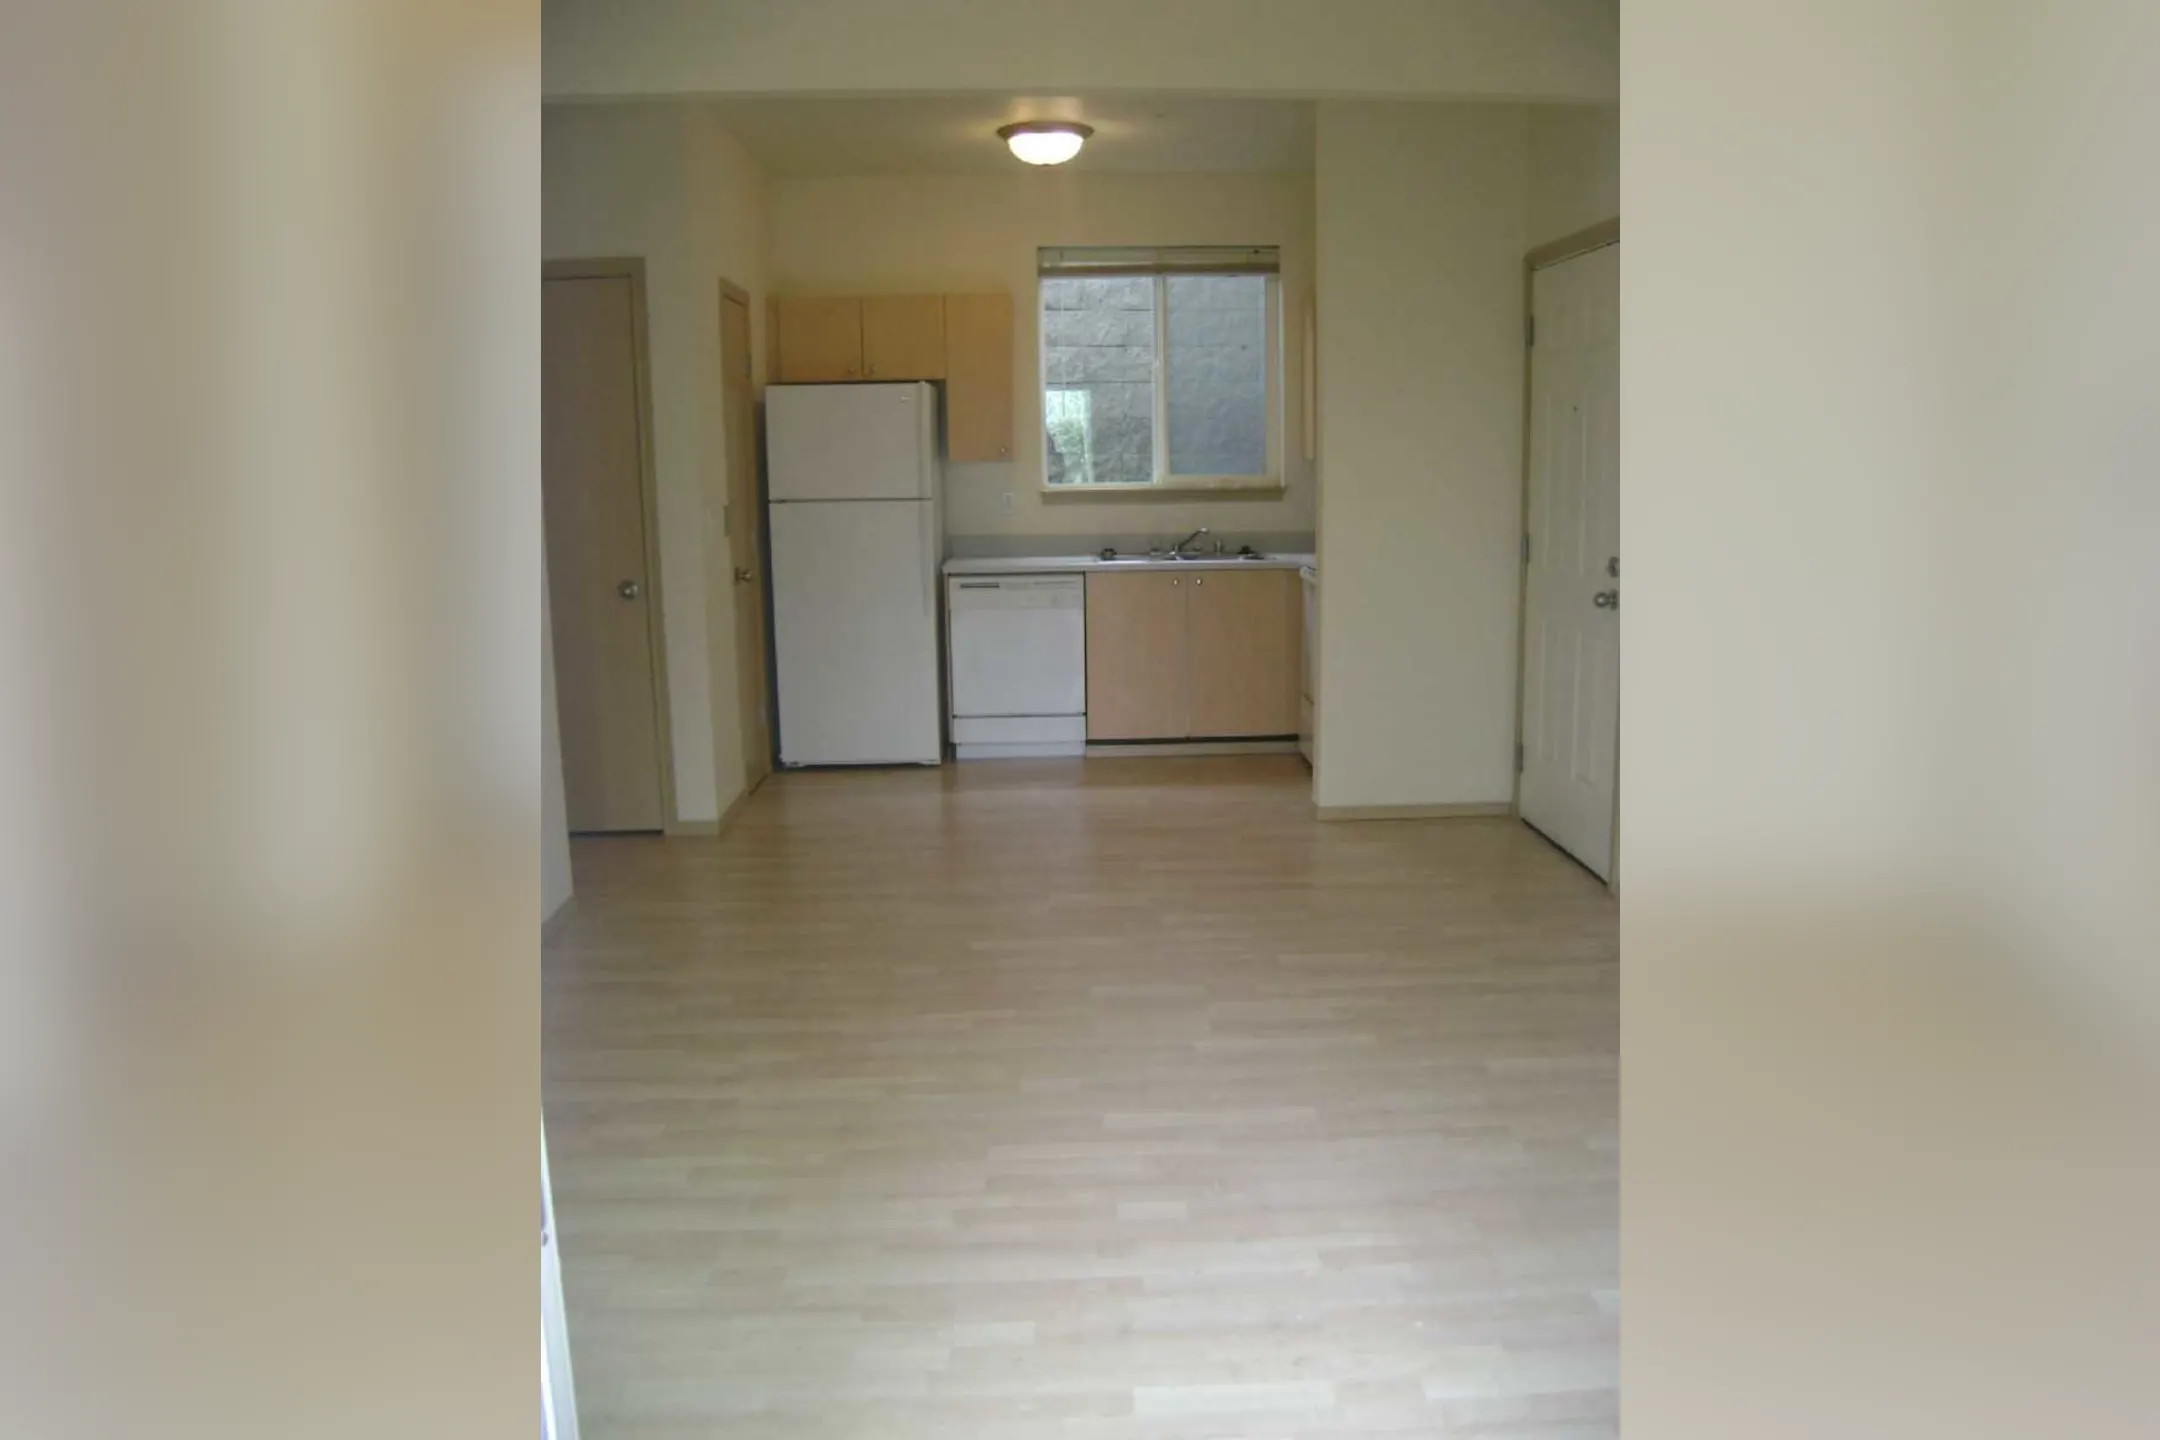 Living Room - The Oasis Apartments - Tacoma, WA